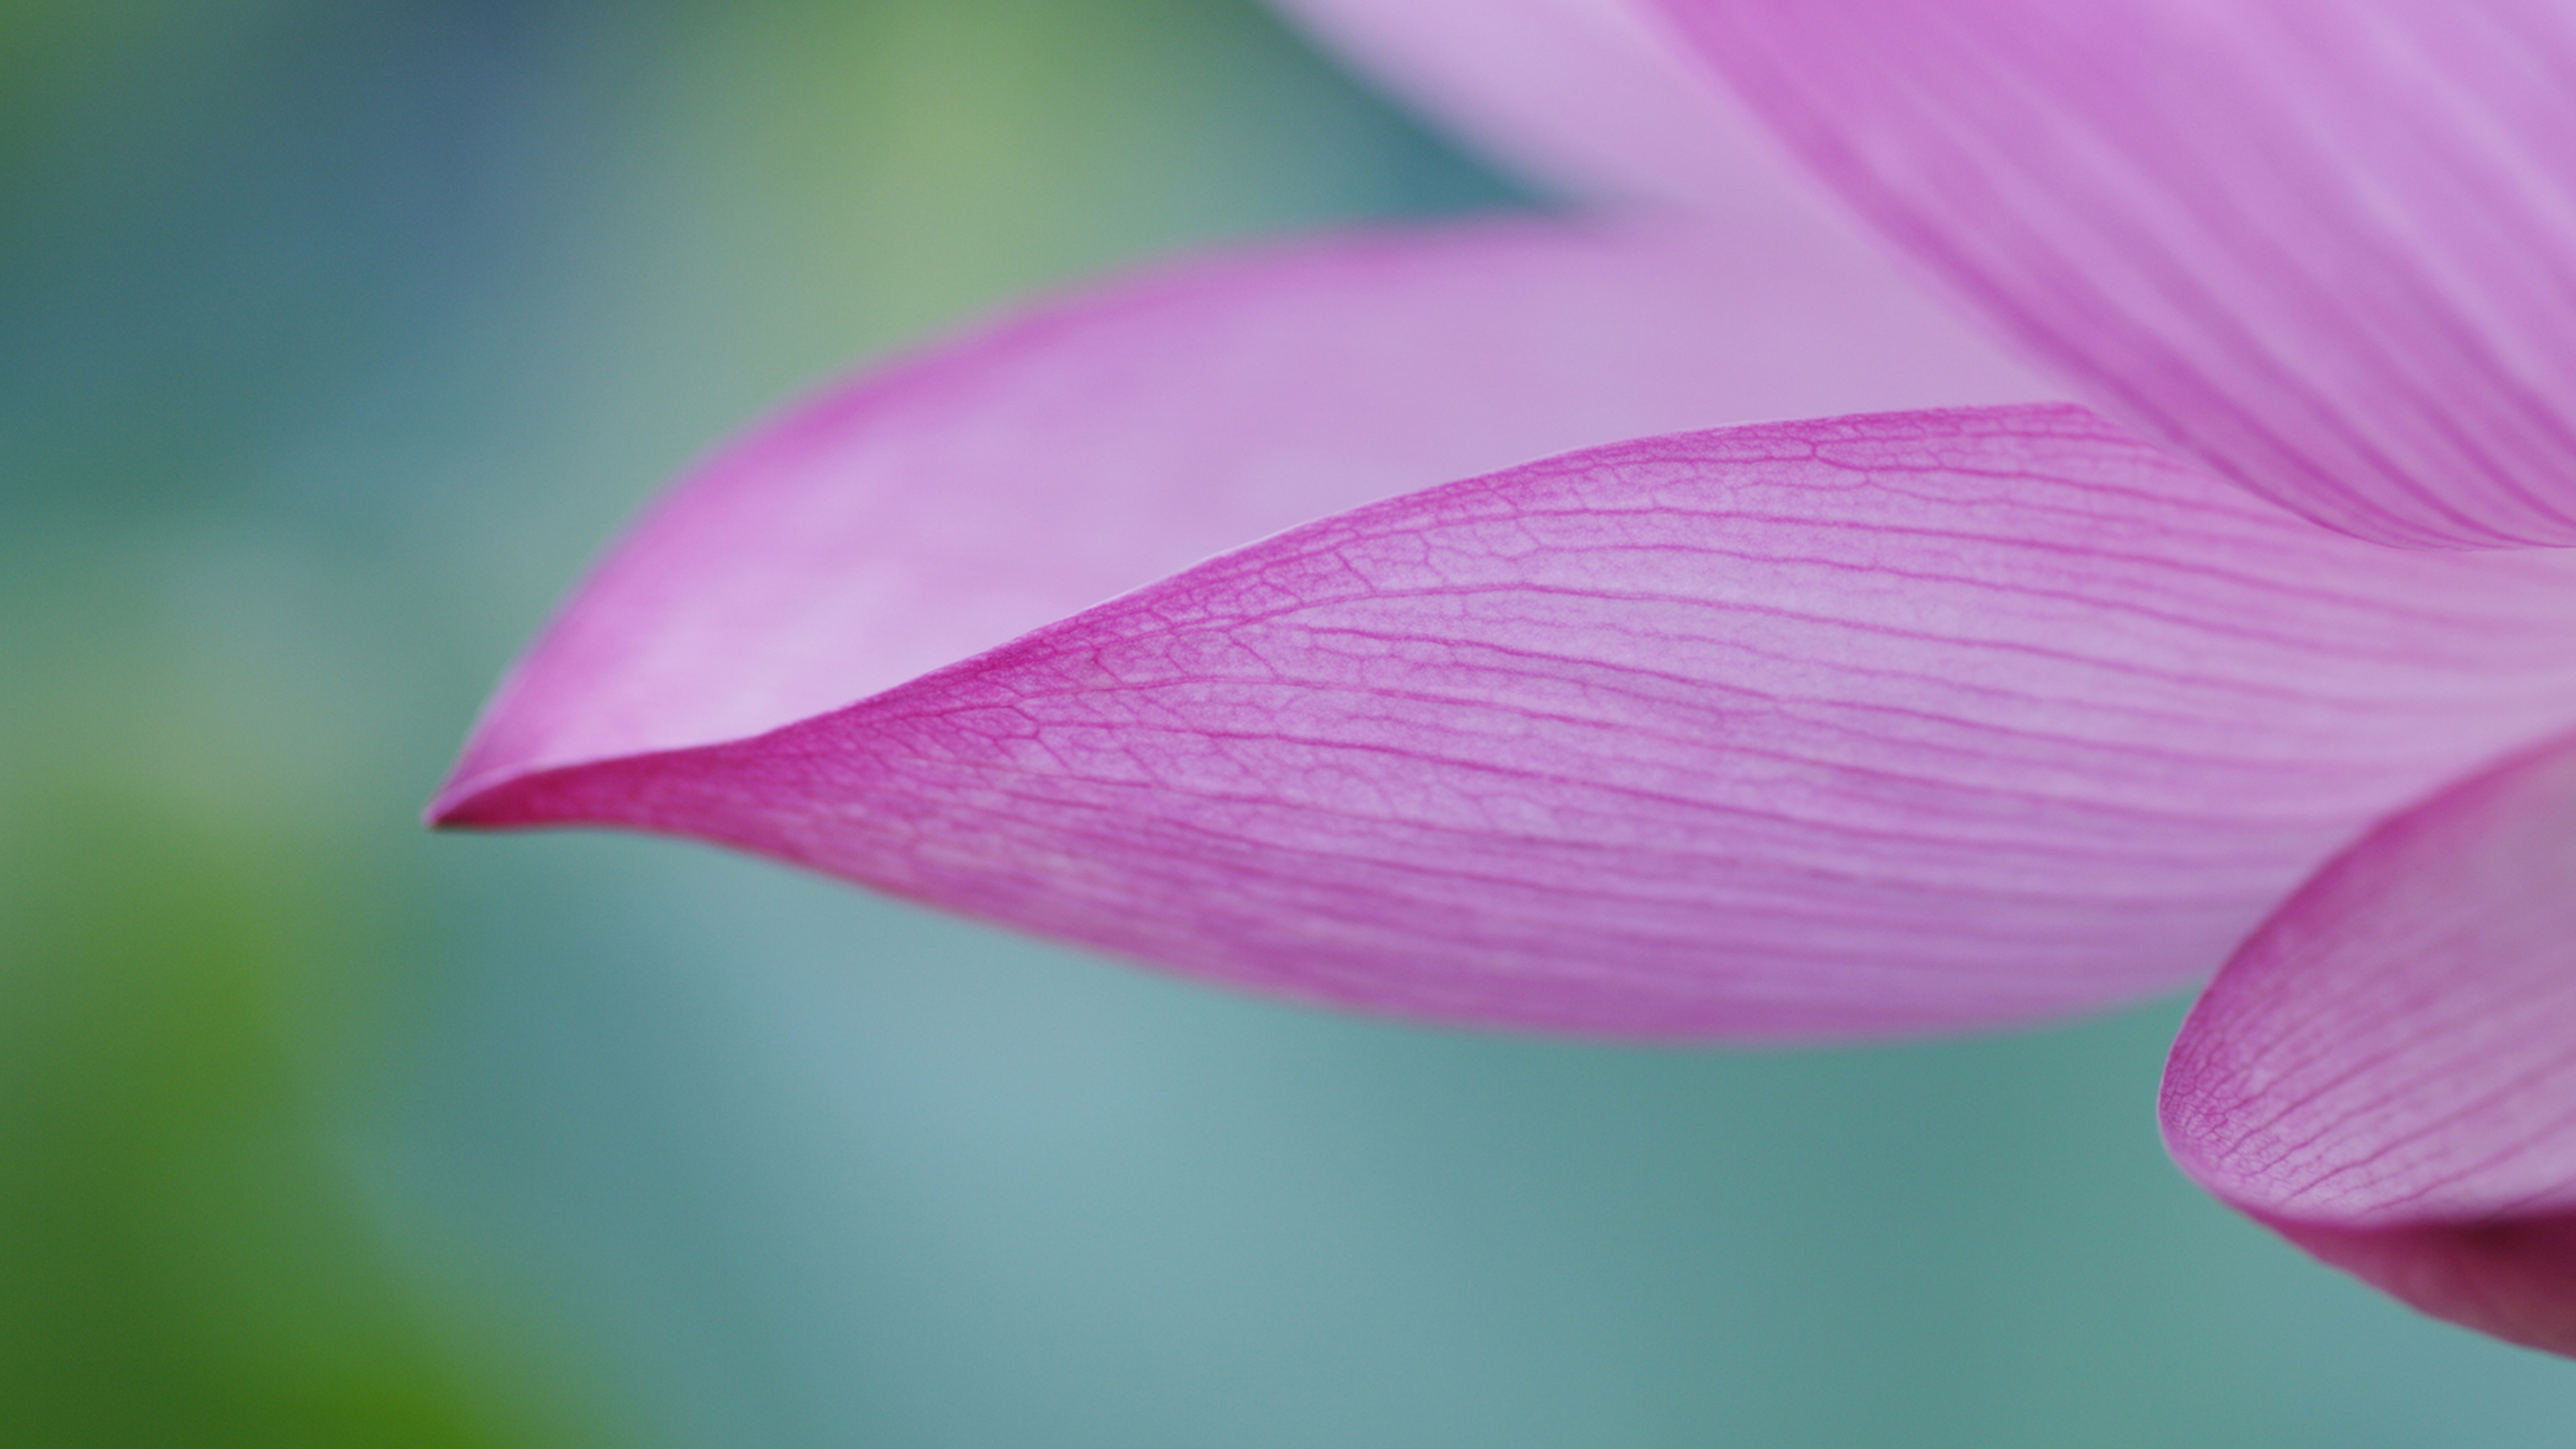 Super high resolution images, Lotus flower wallpaper, 3840x2160 4K Desktop